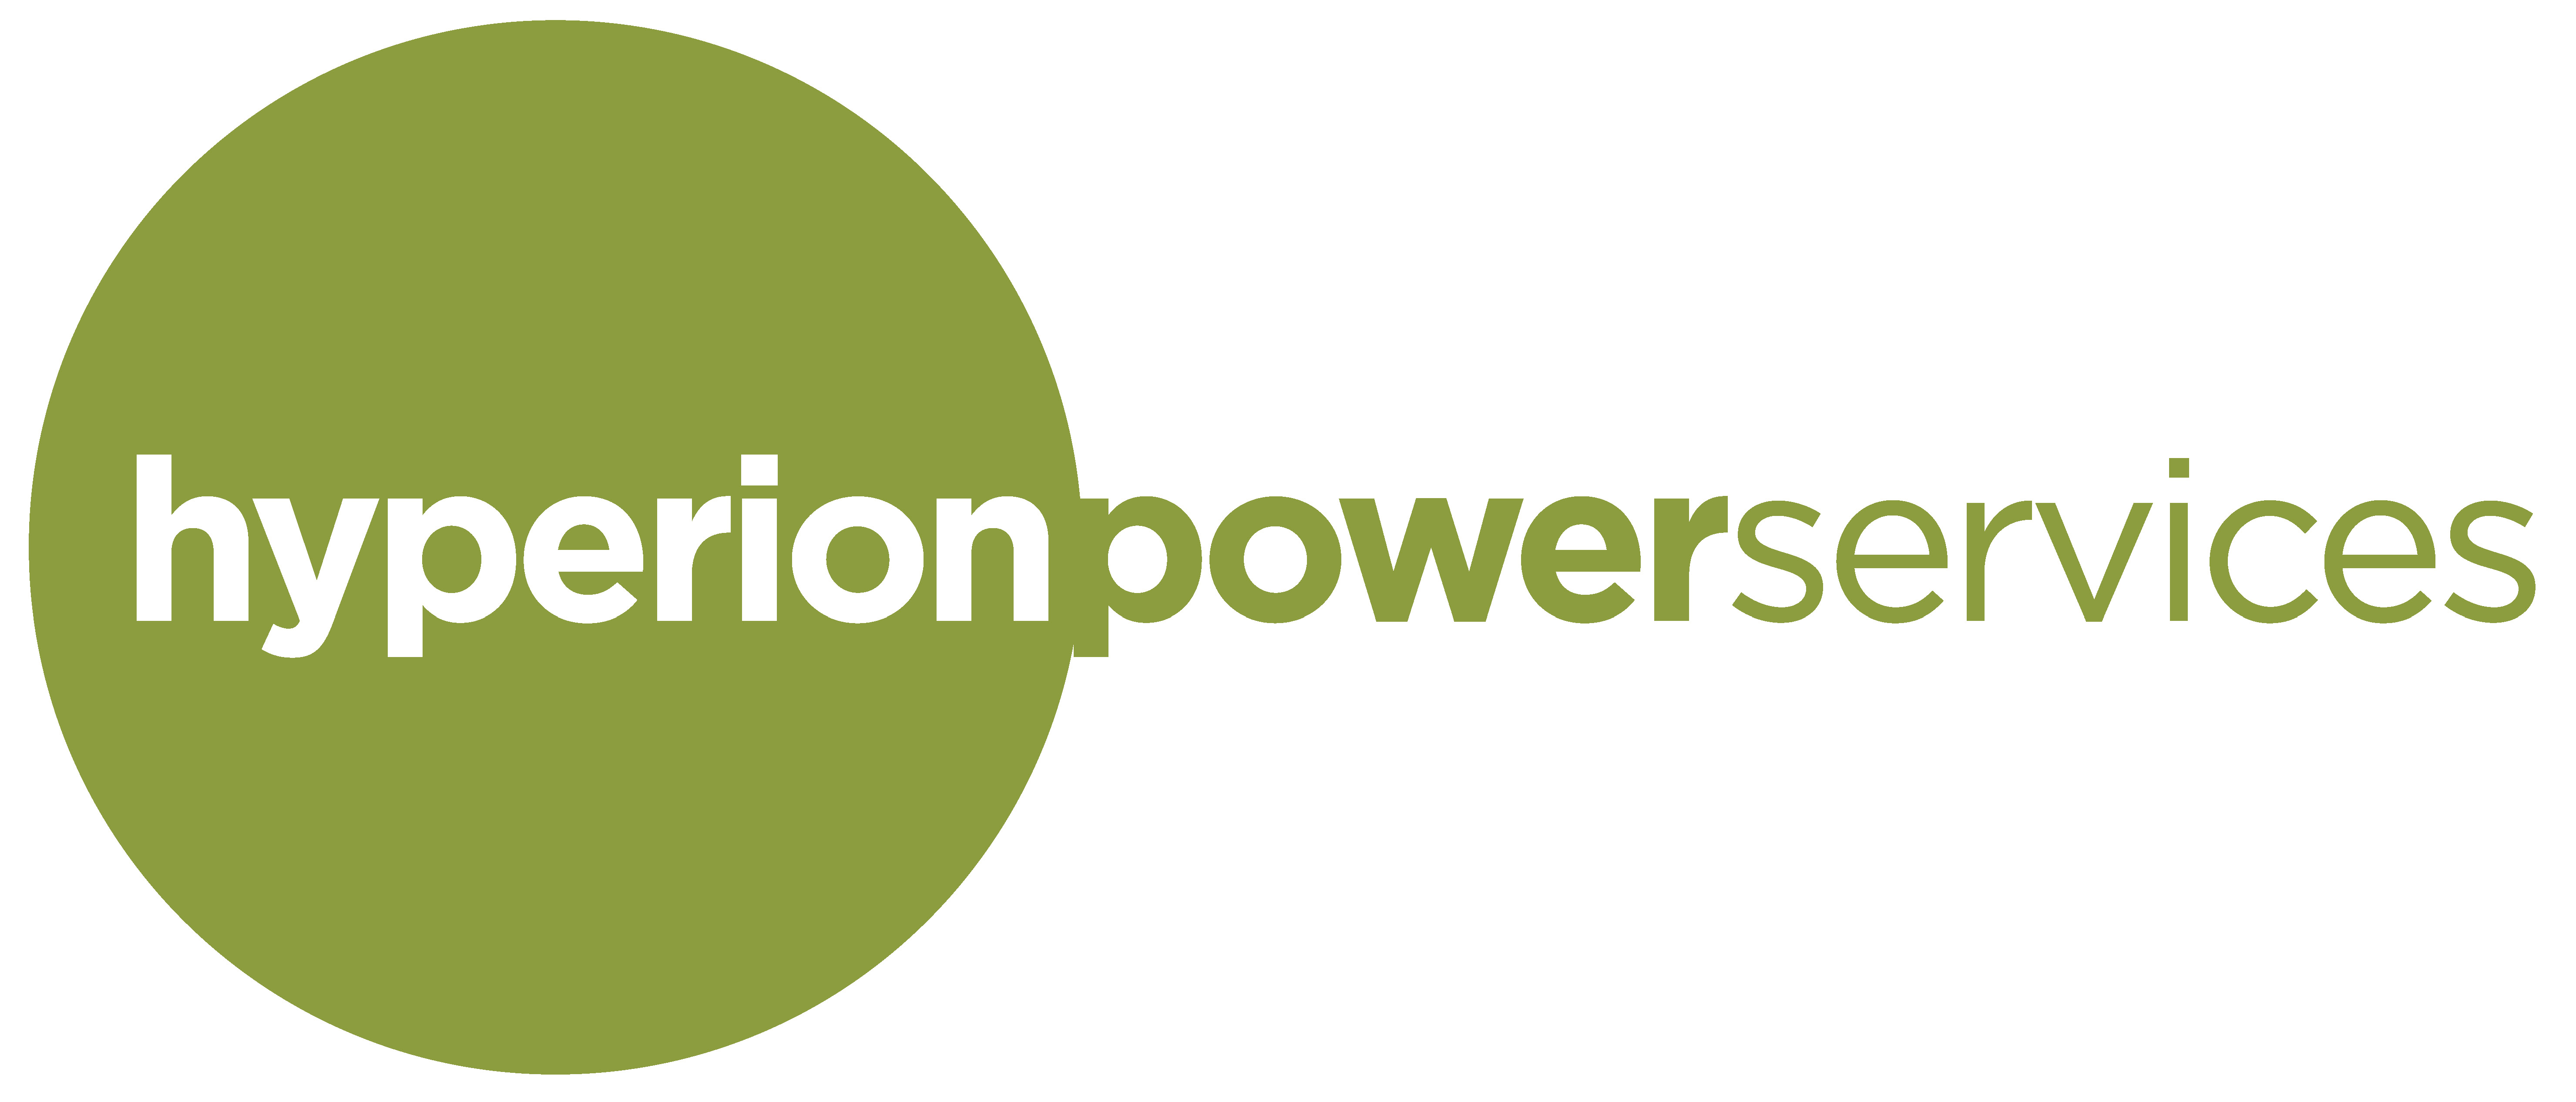 Hyperion Power Services Logo (updated).jpg